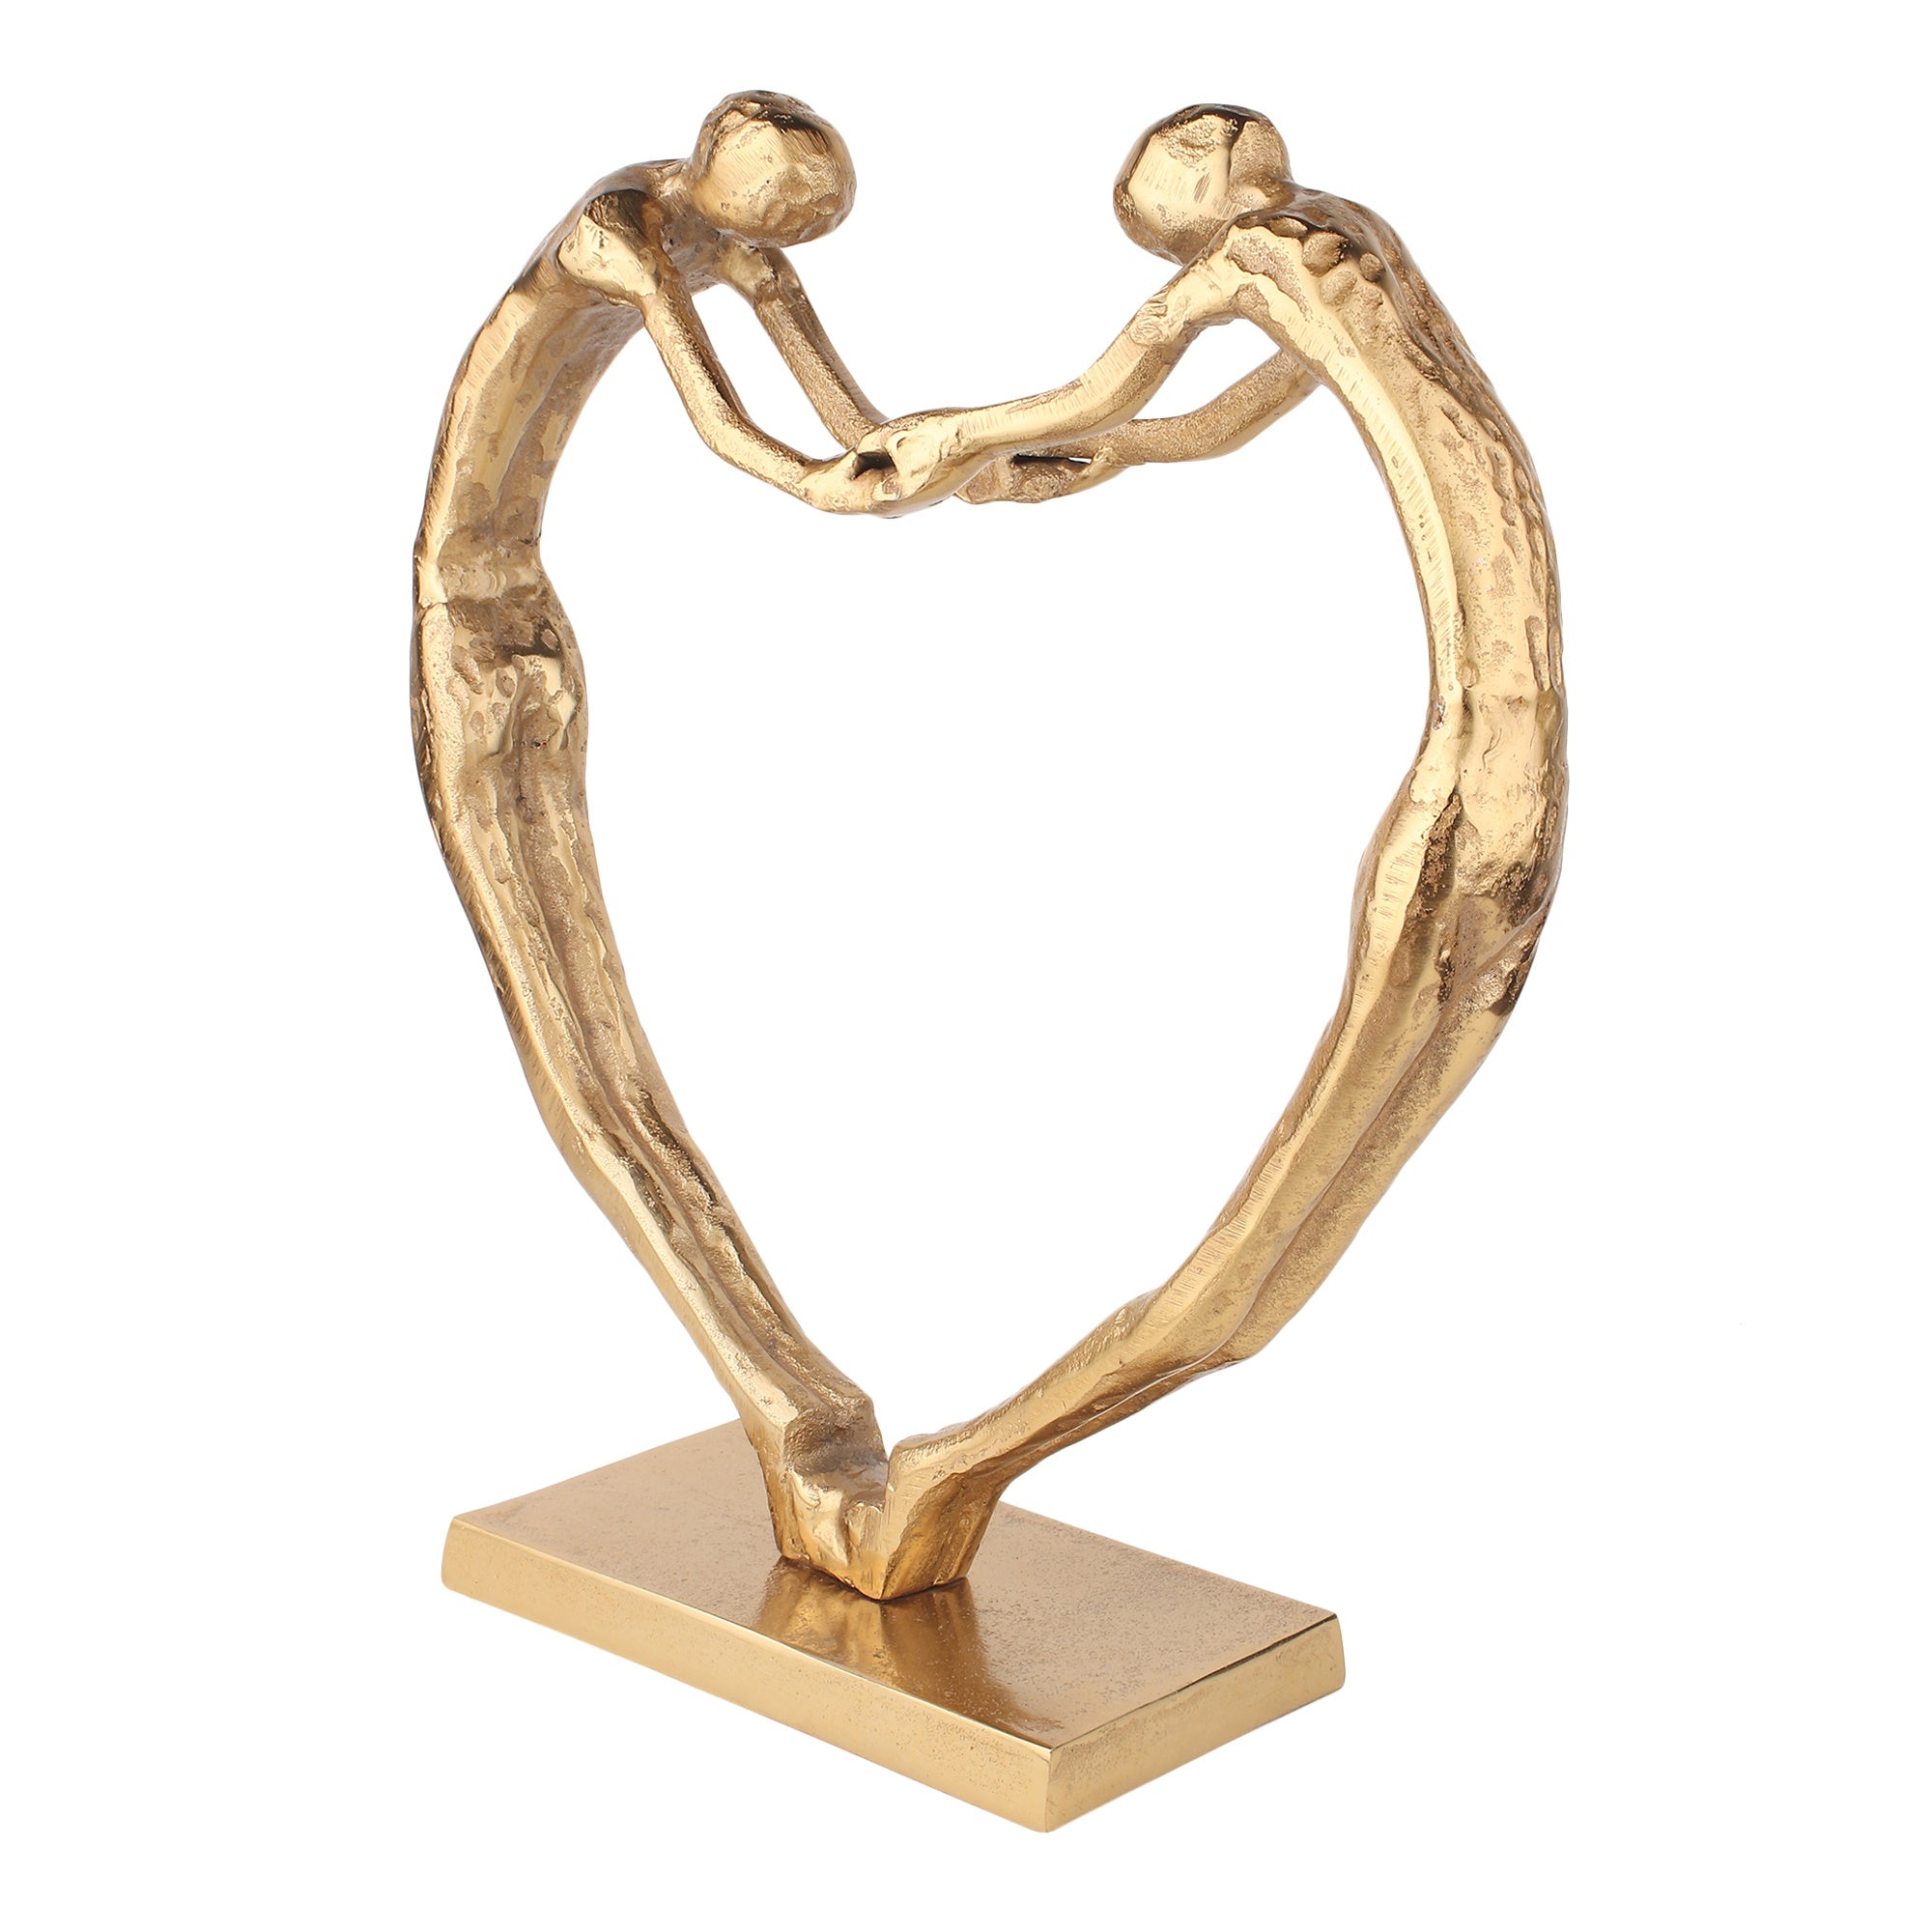 Heartfelt Harmony Sculpture in Gold